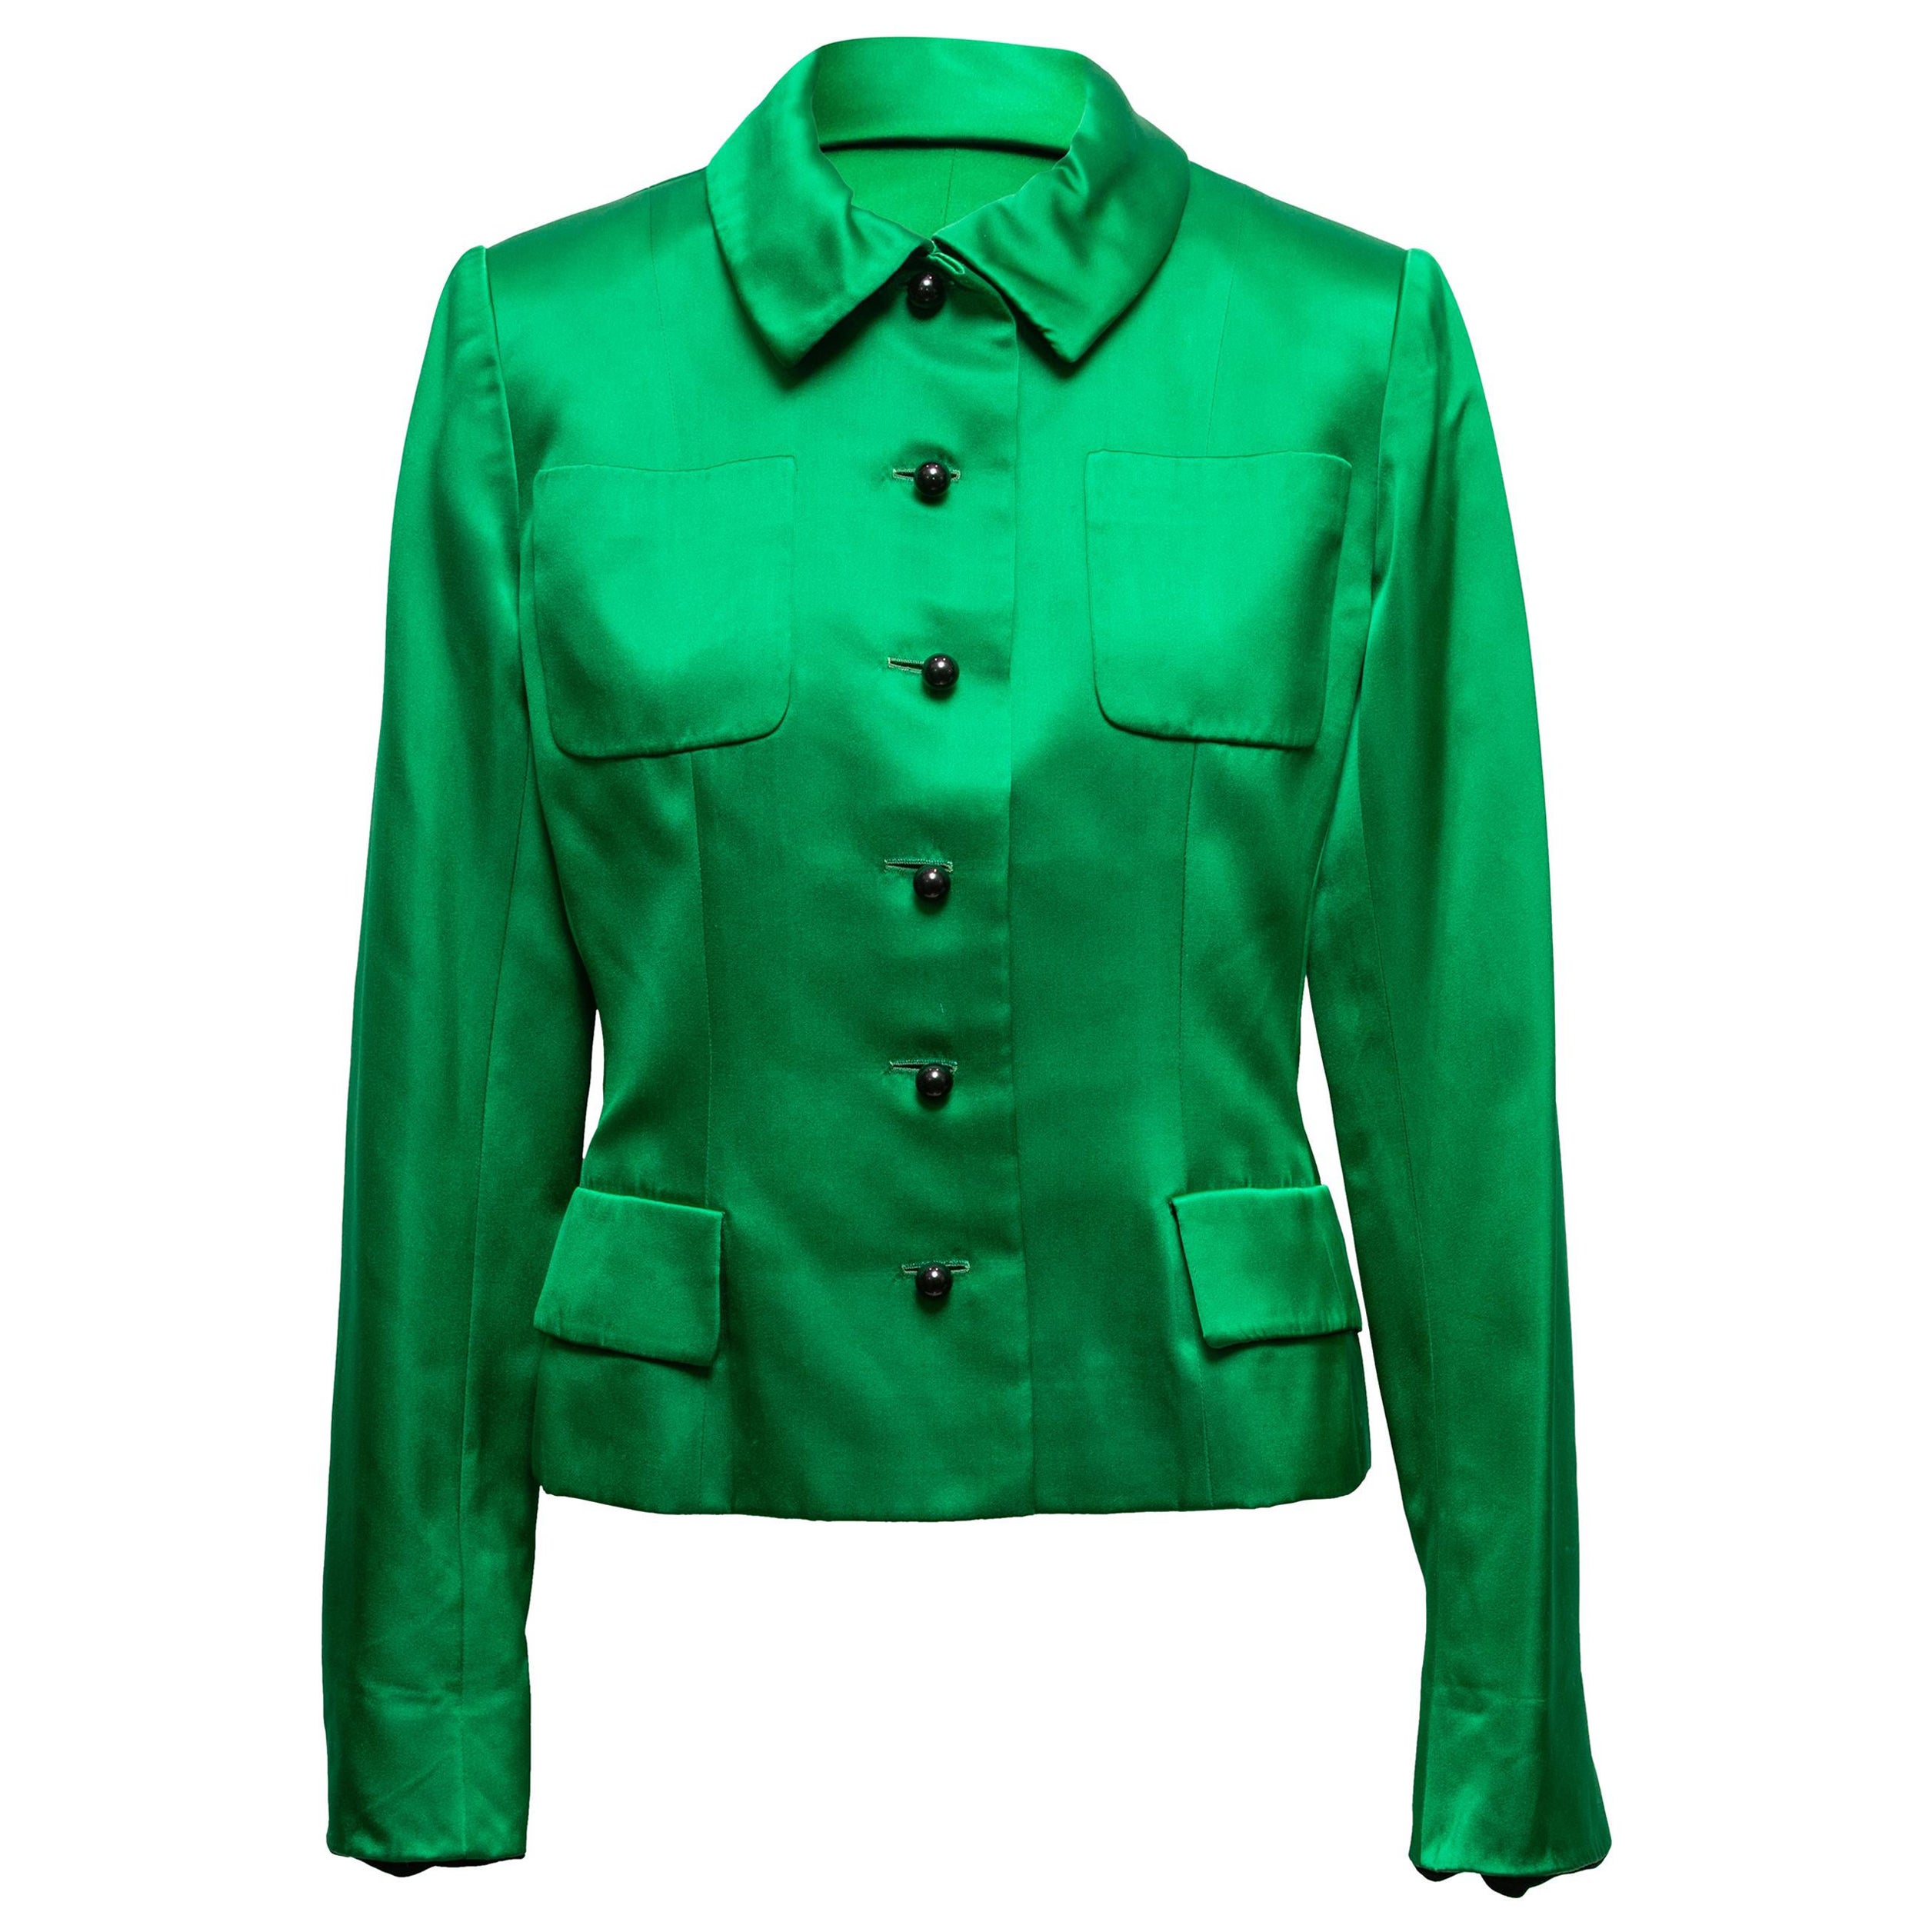 Vintage Green Bill Blass Satin Jacket Size US 12